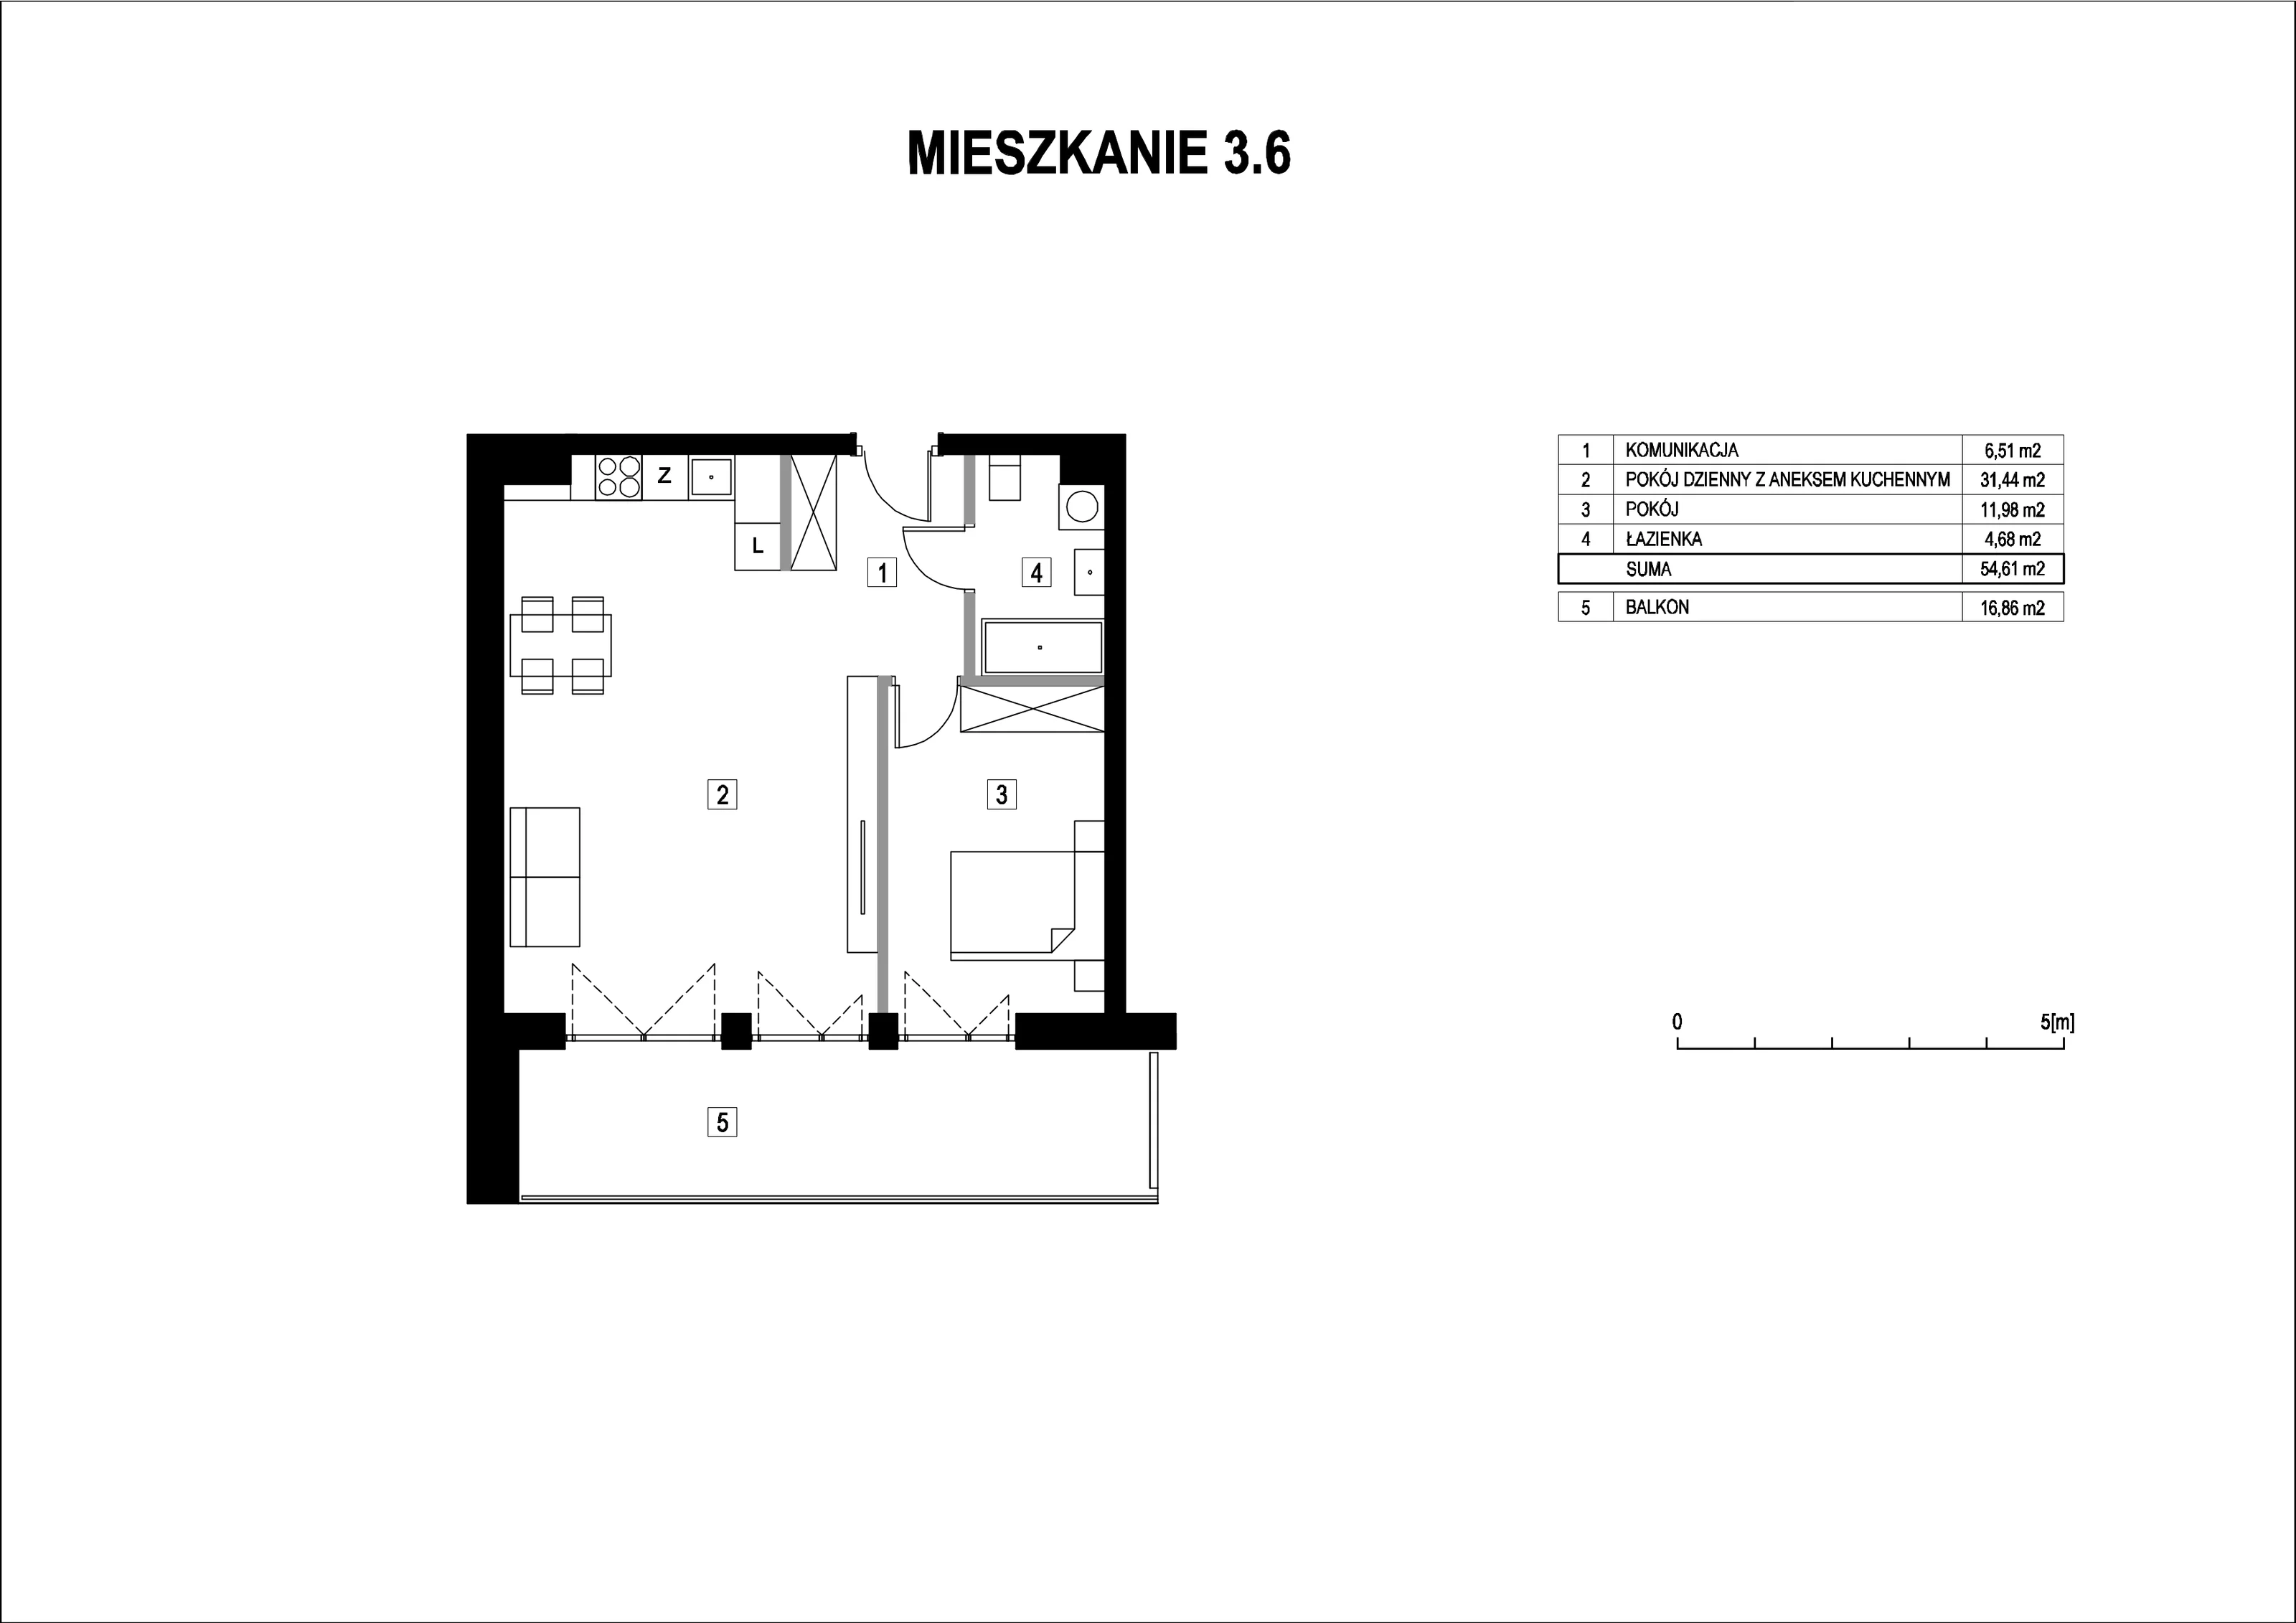 Mieszkanie 54,61 m², piętro 3, oferta nr M3_6, La Vie Art, Łódź, Polesie, ul. 6 Sierpnia 10